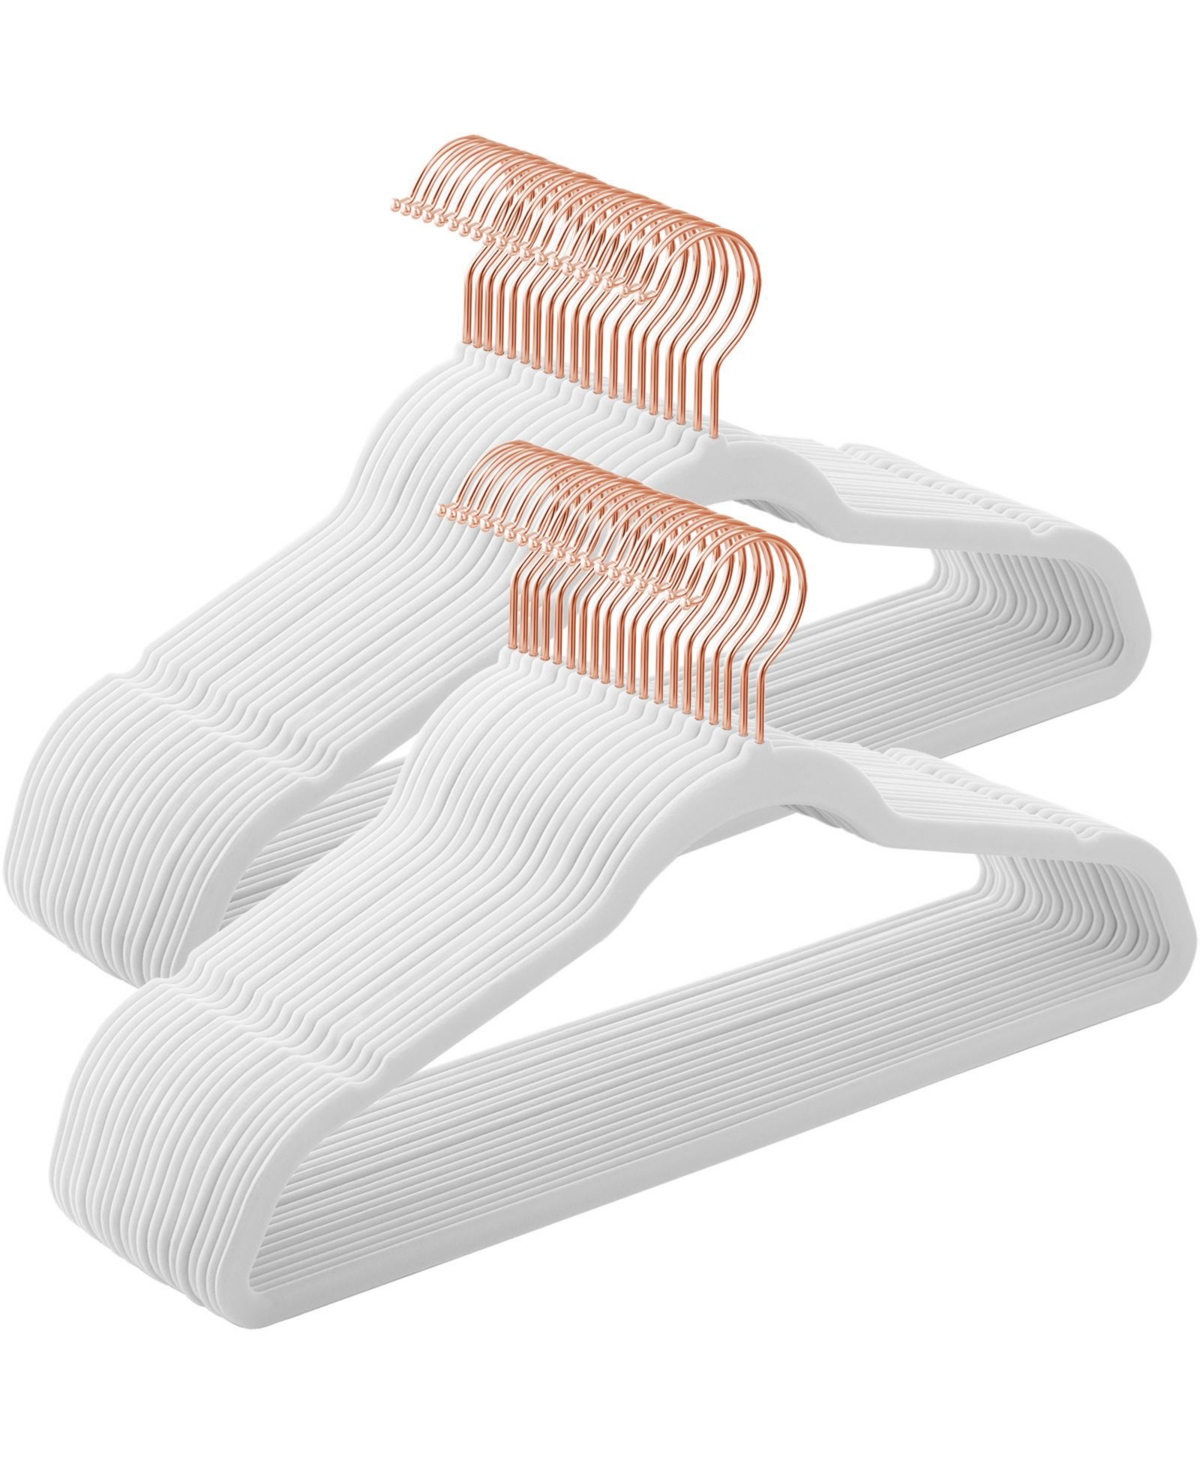 Velvet Hangers Pack, Non Slip Hangers With Swivel Hook, Slim Hangers Space Saving, 50 Pieces - White